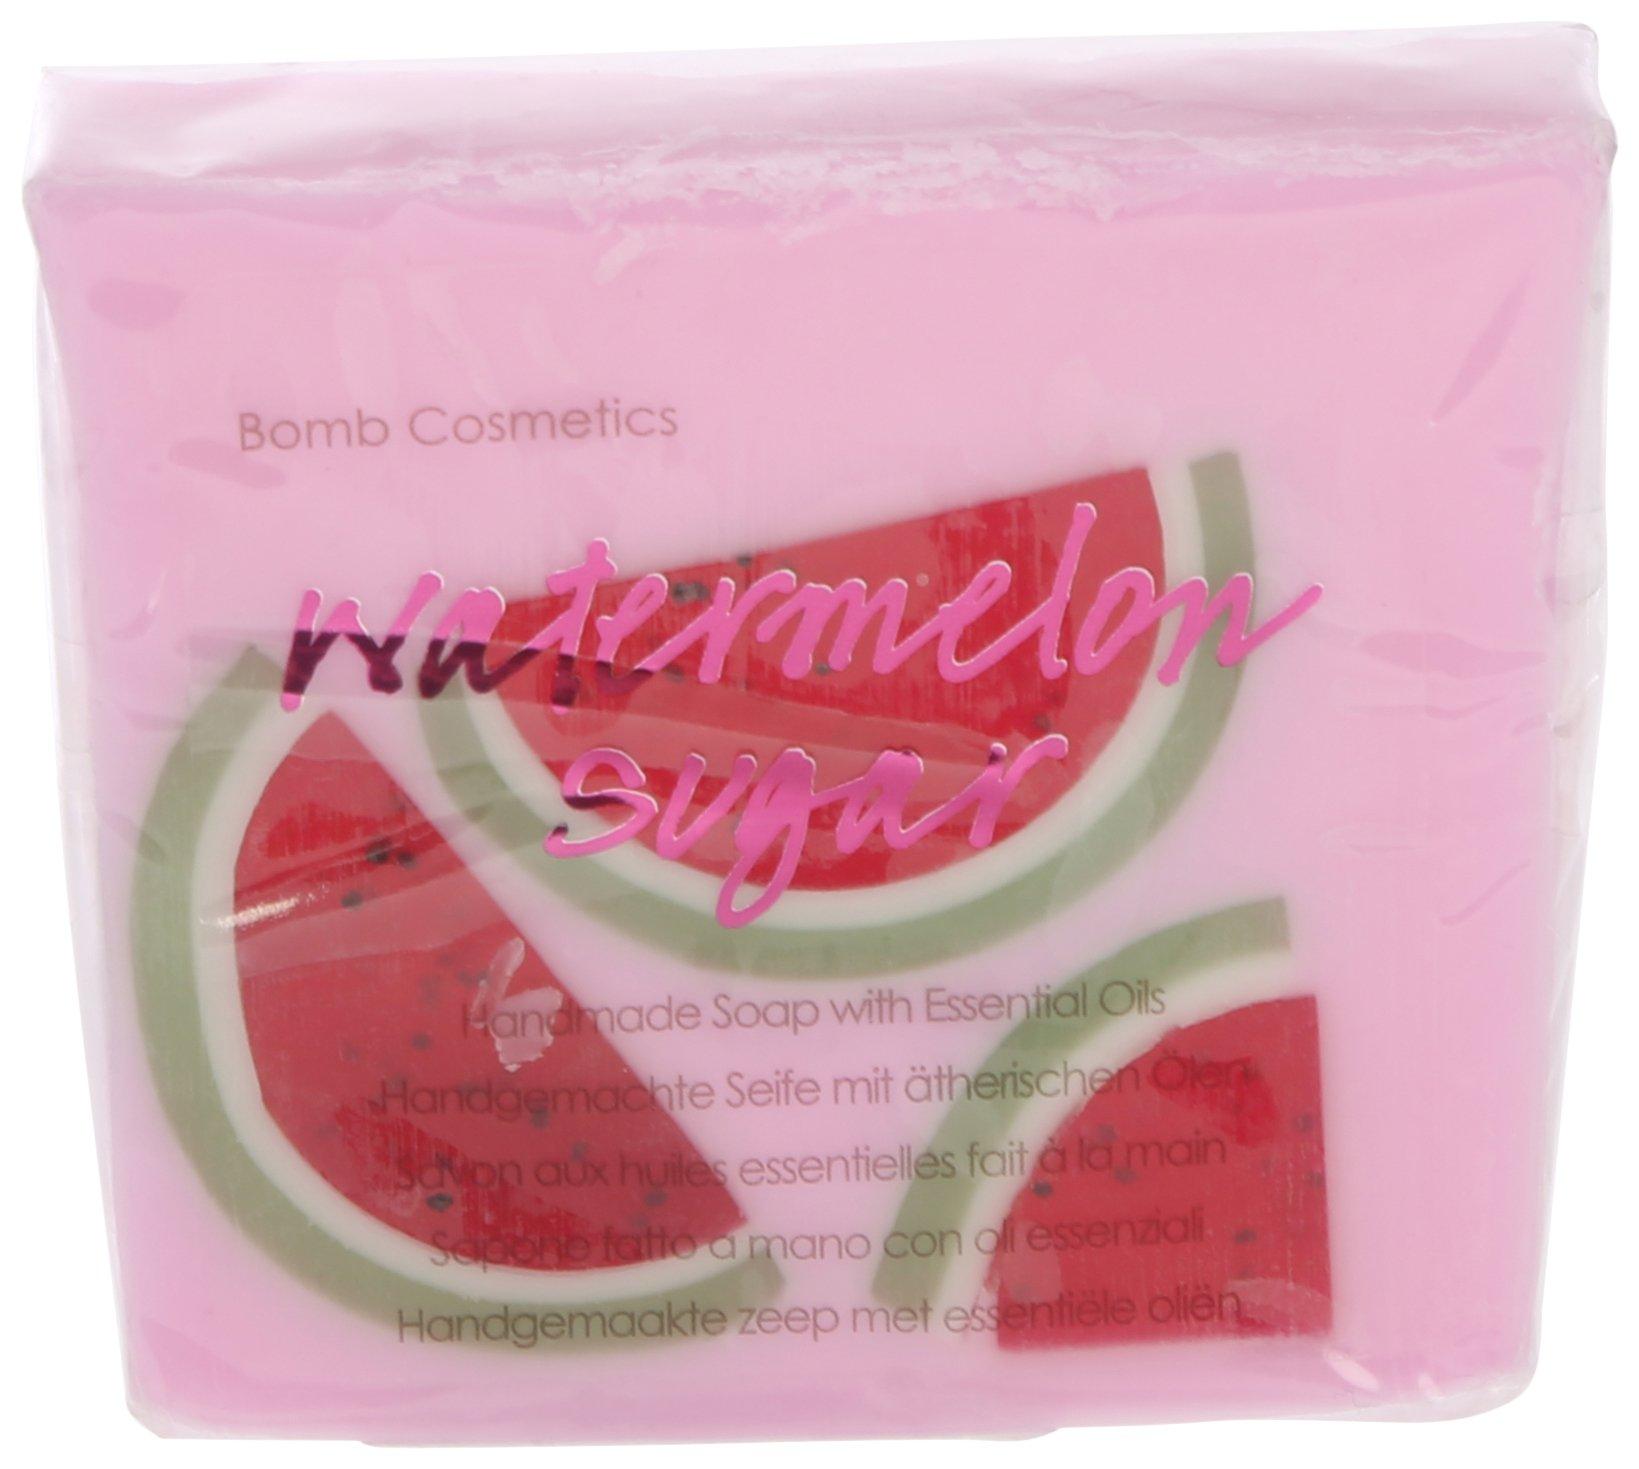 Bomb Cosmetics 3.5 oz. Watermelon Sugar Handmade Soap